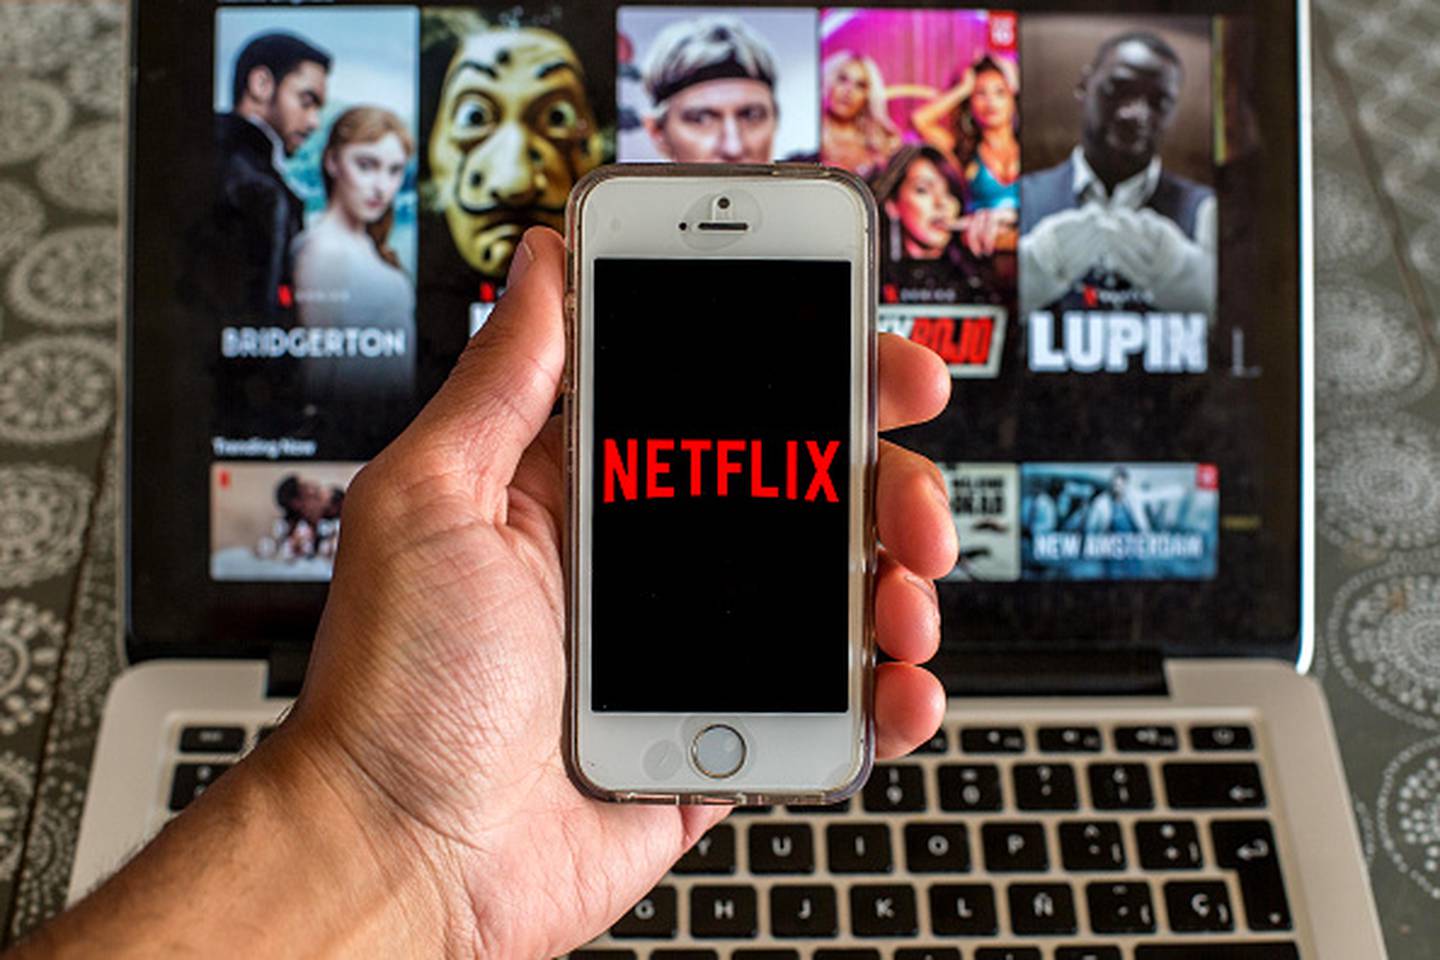 Netflix will now ban account sharing